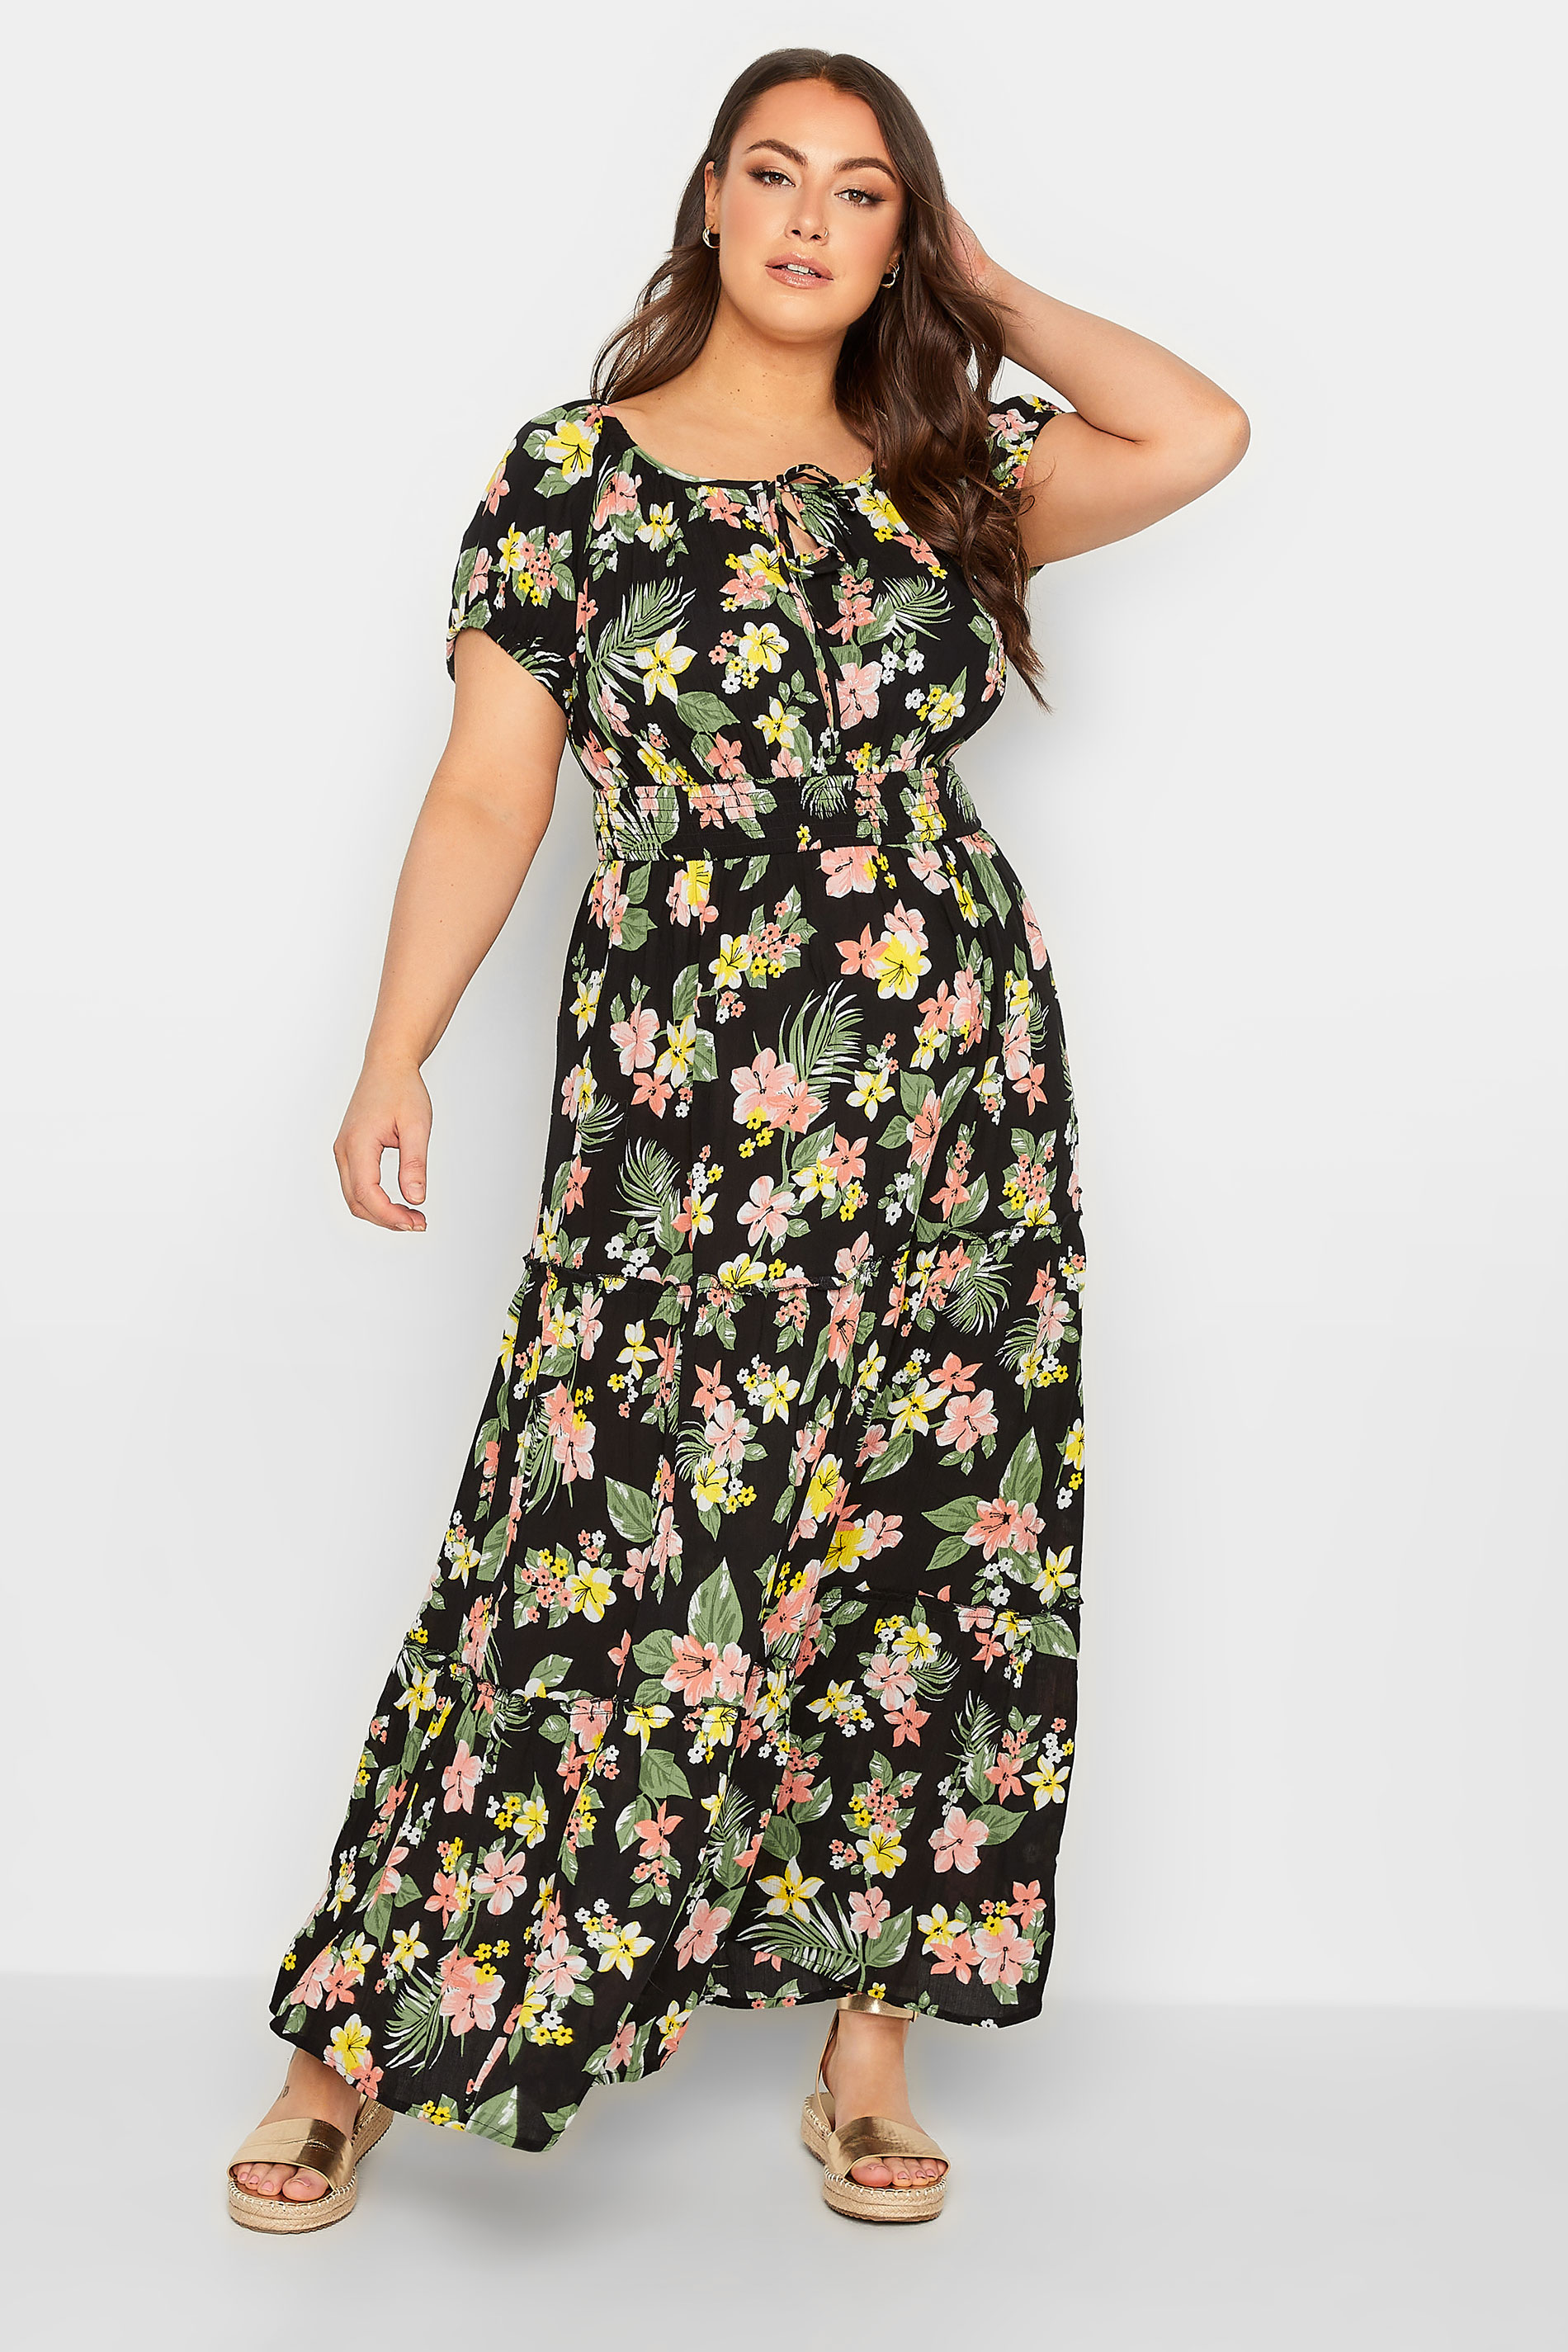 YOURS Curve Plus Size Black Tropical Print Bardot Maxi Dress | Yours Clothing  1